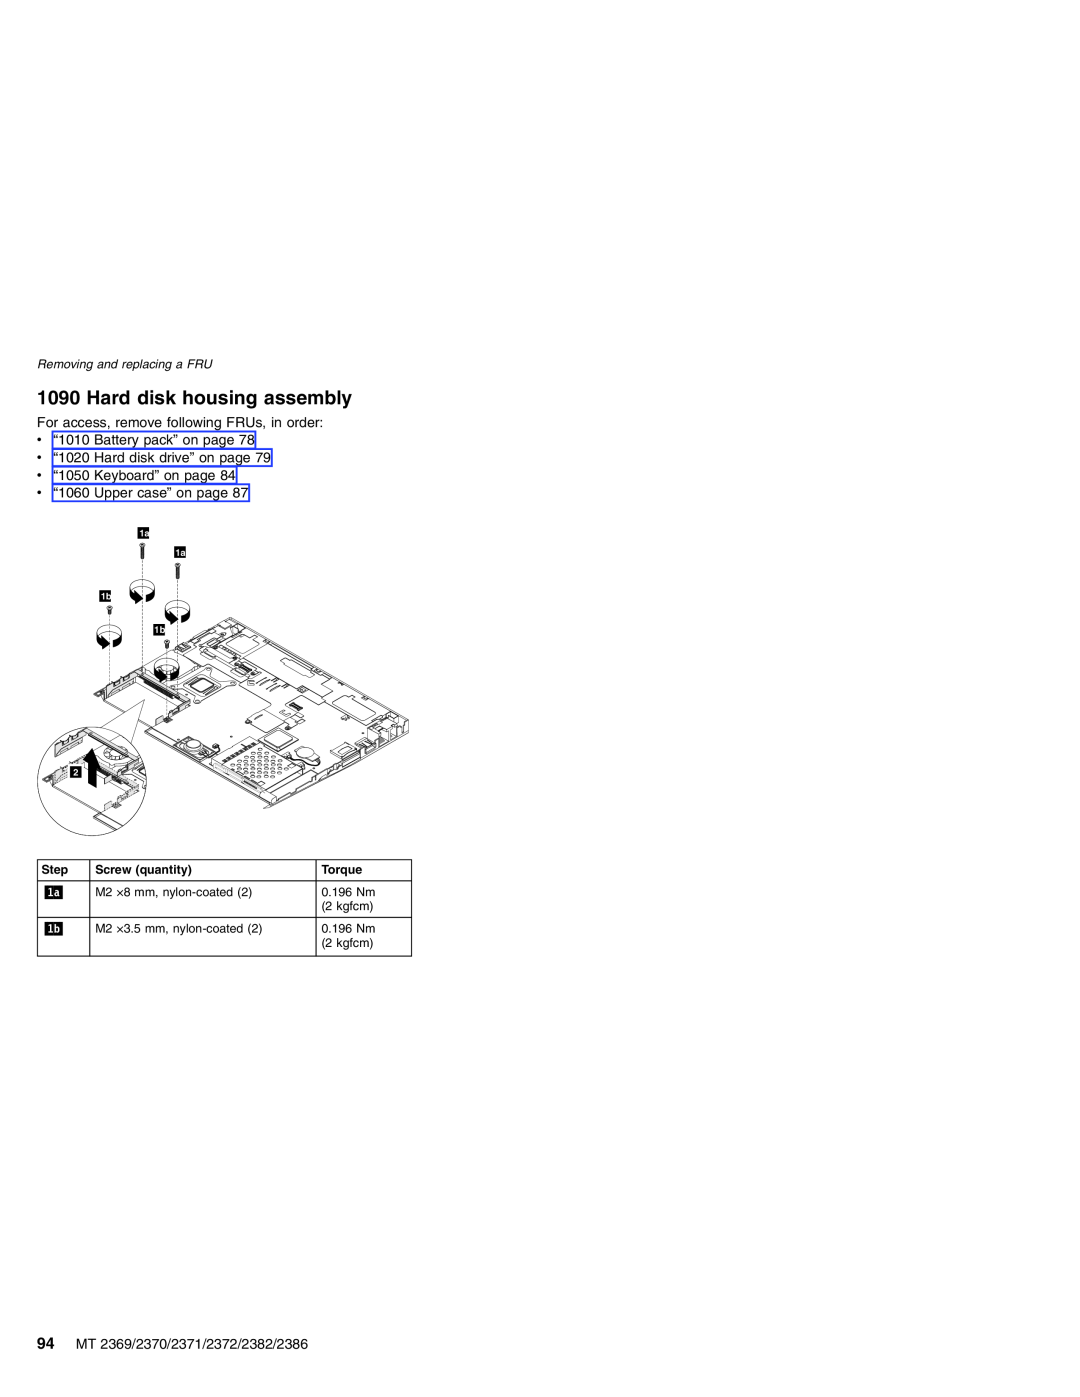 Lenovo MT 2369 manual Hard disk housing assembly, 1a 1a 1b 1b 